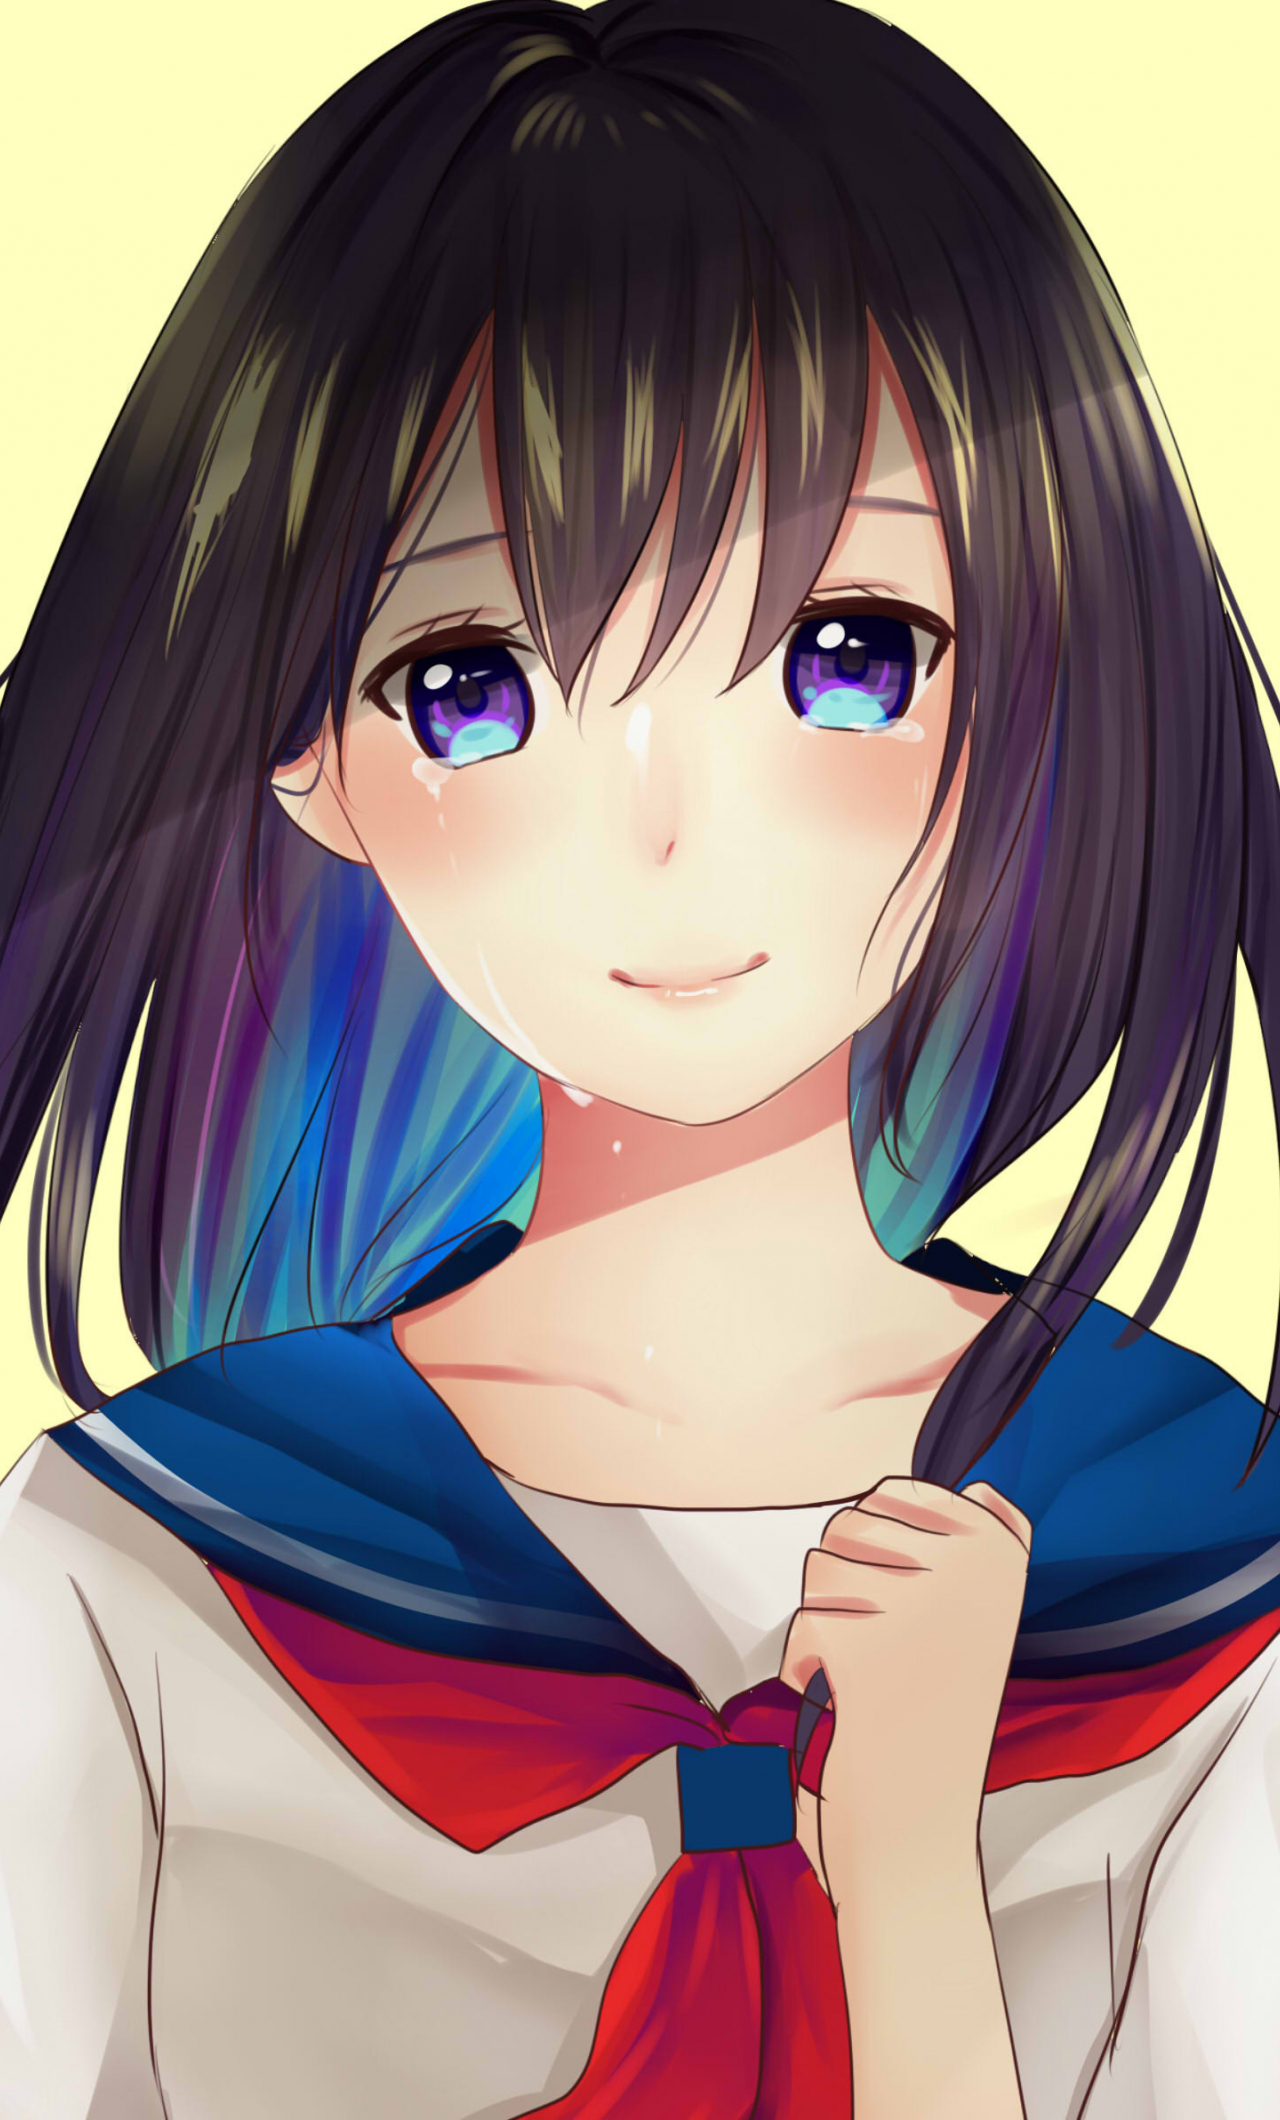 Download 1280x2120 Wallpaper Cute Anime Girl Crying School